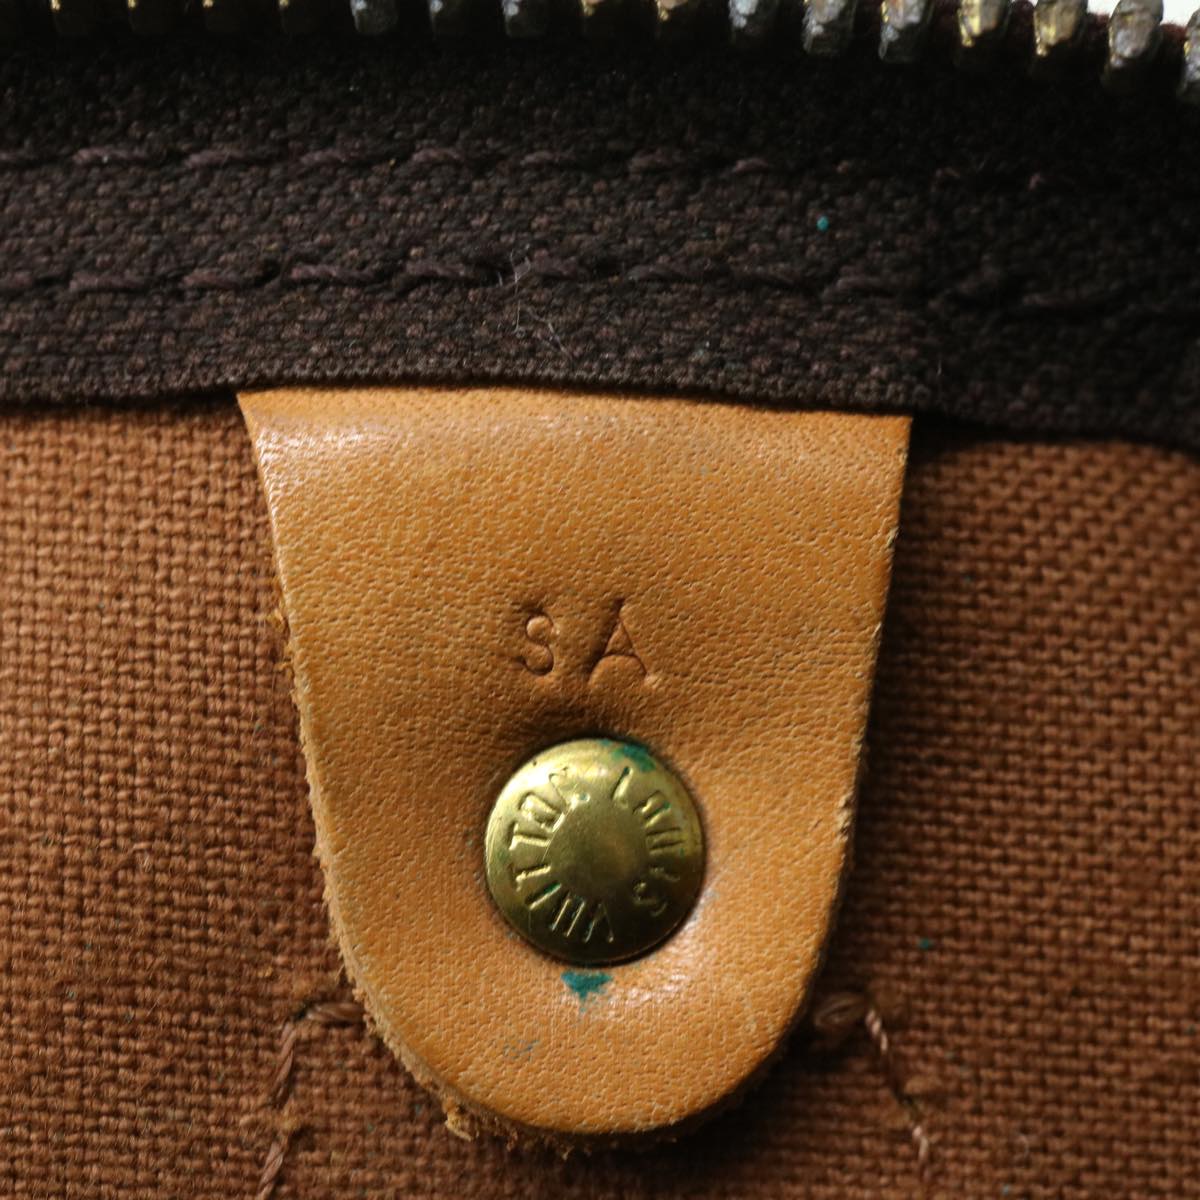 Louis Vuitton Monogram Speedy 40 Hand Bag M41522 LV Auth Pt4052